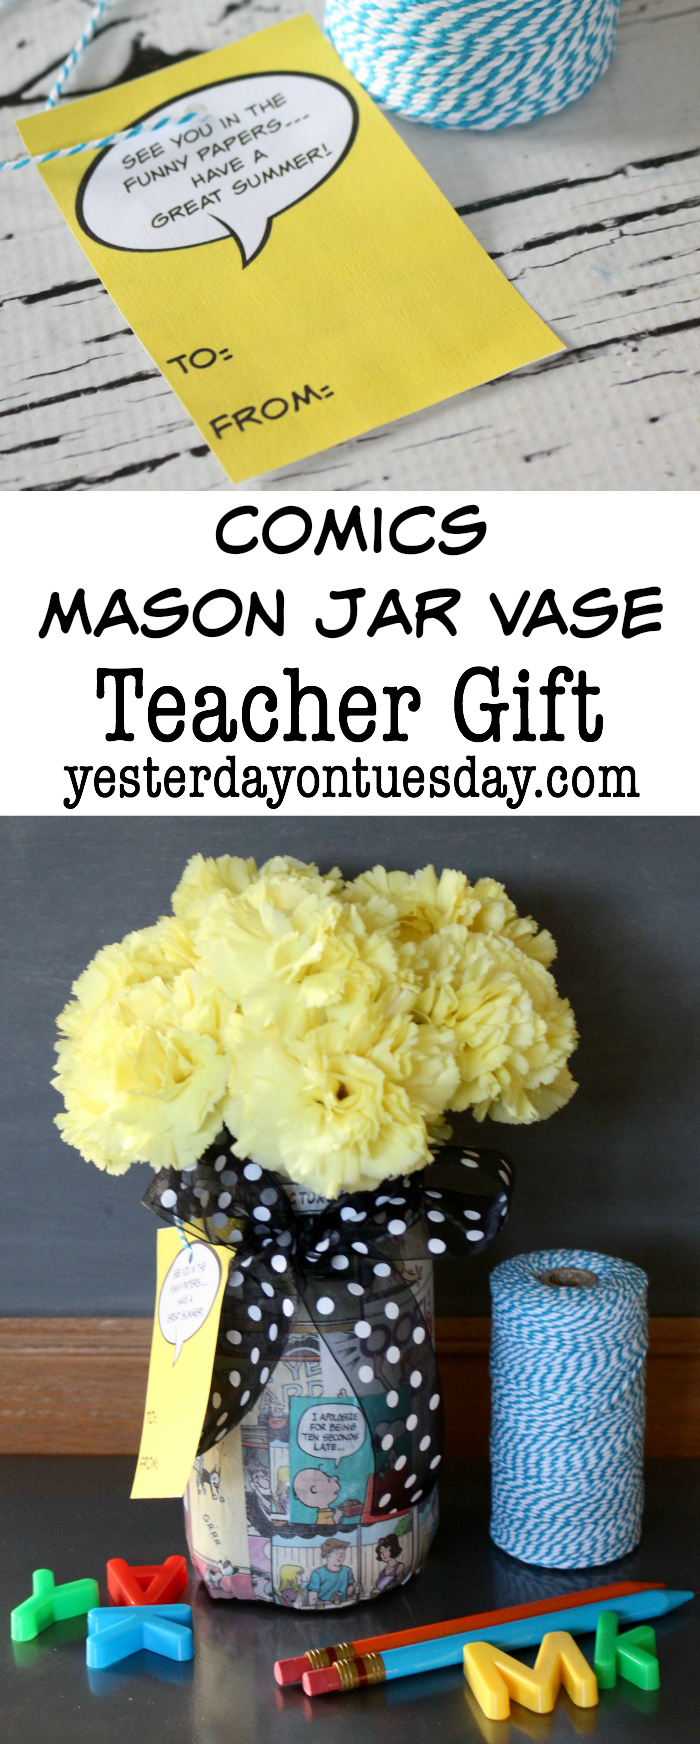 Comics Mason Jar Vase Teacher Gift with Printable Tags